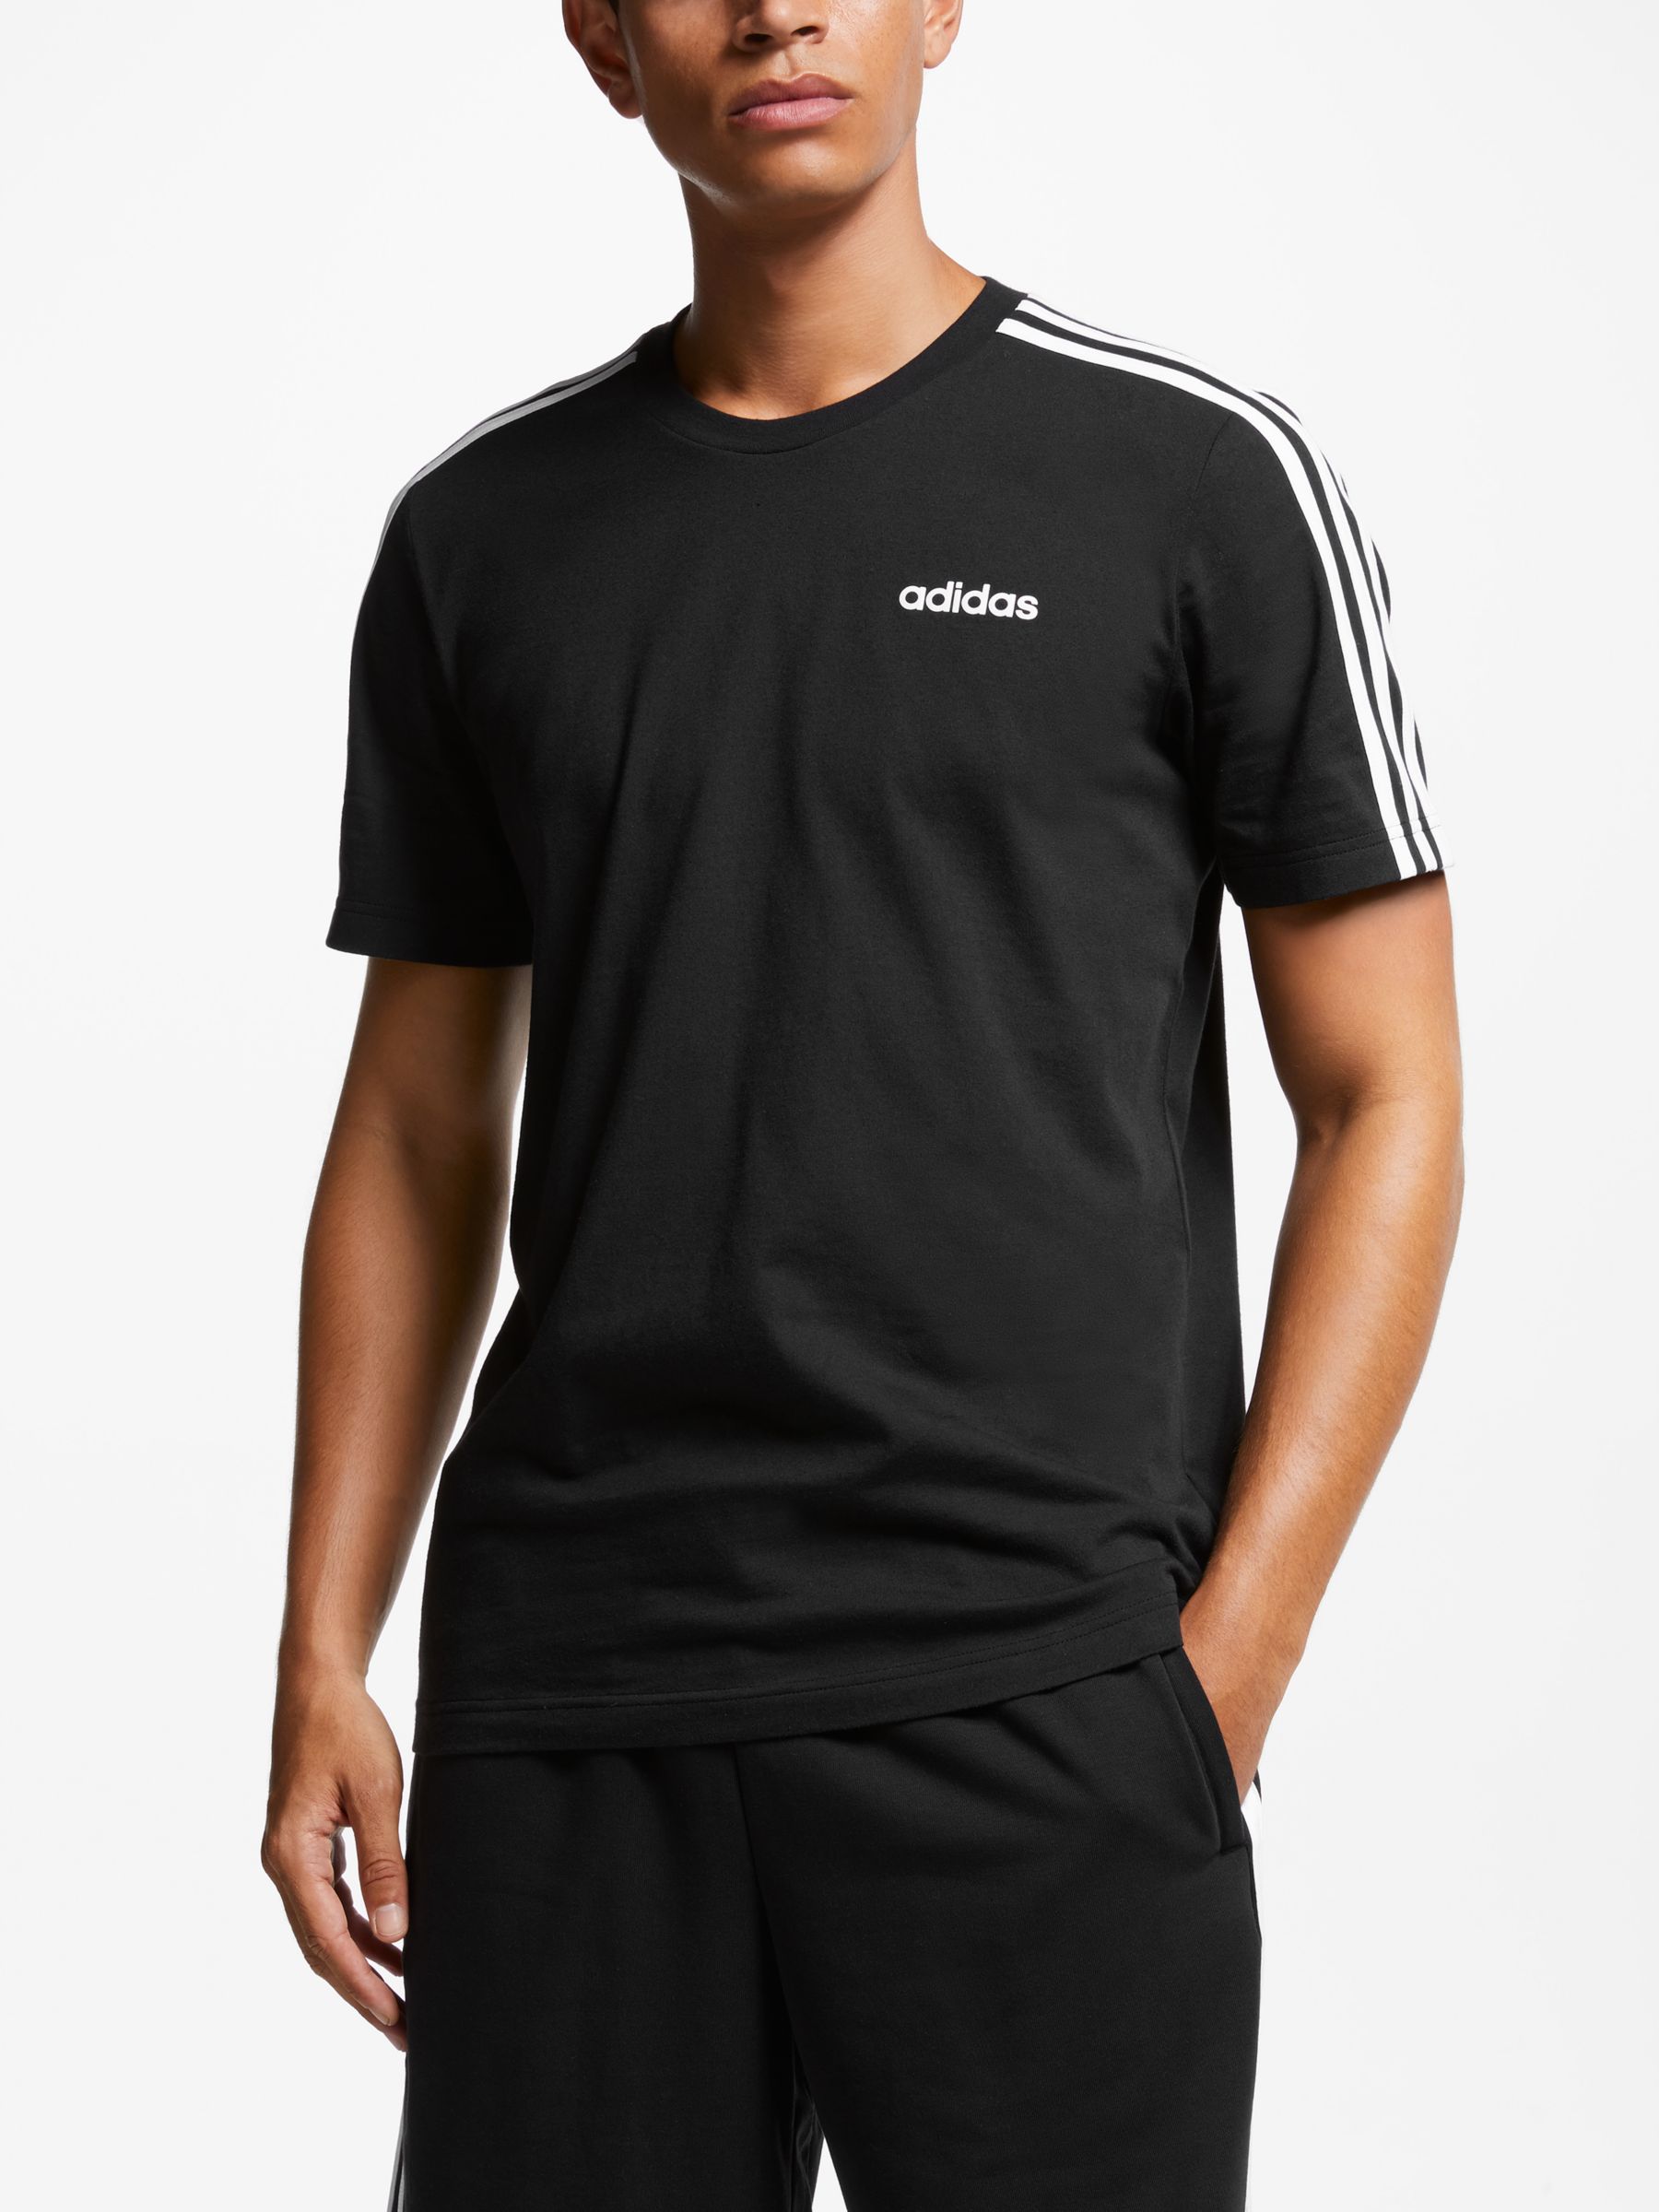 black adidas t shirt with white stripes